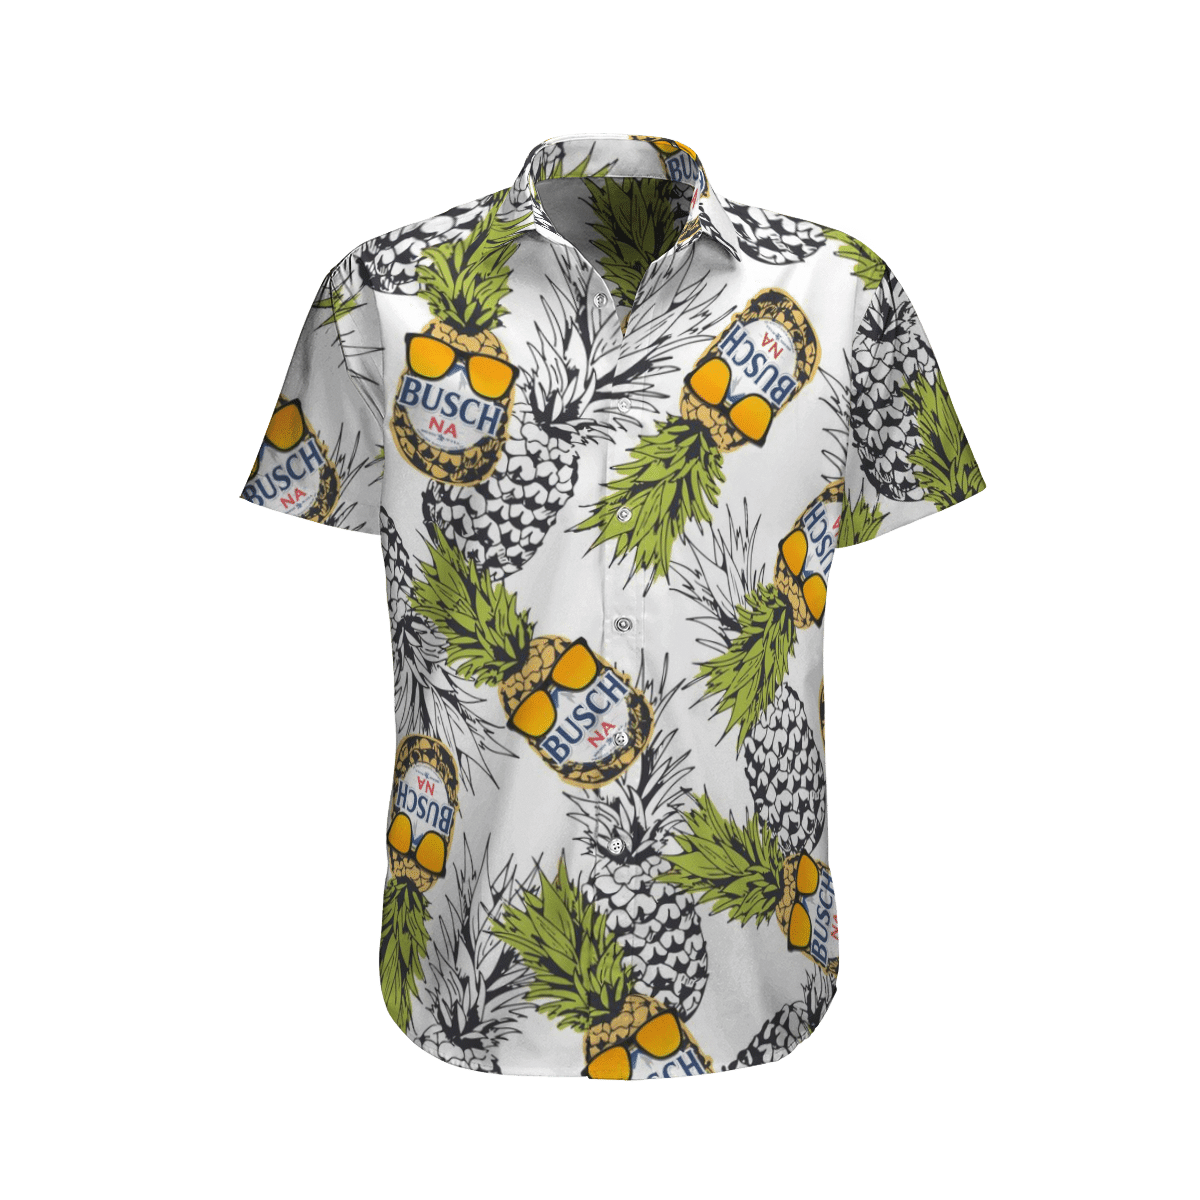 Pineapple busch NA Hawaiian shirt and short